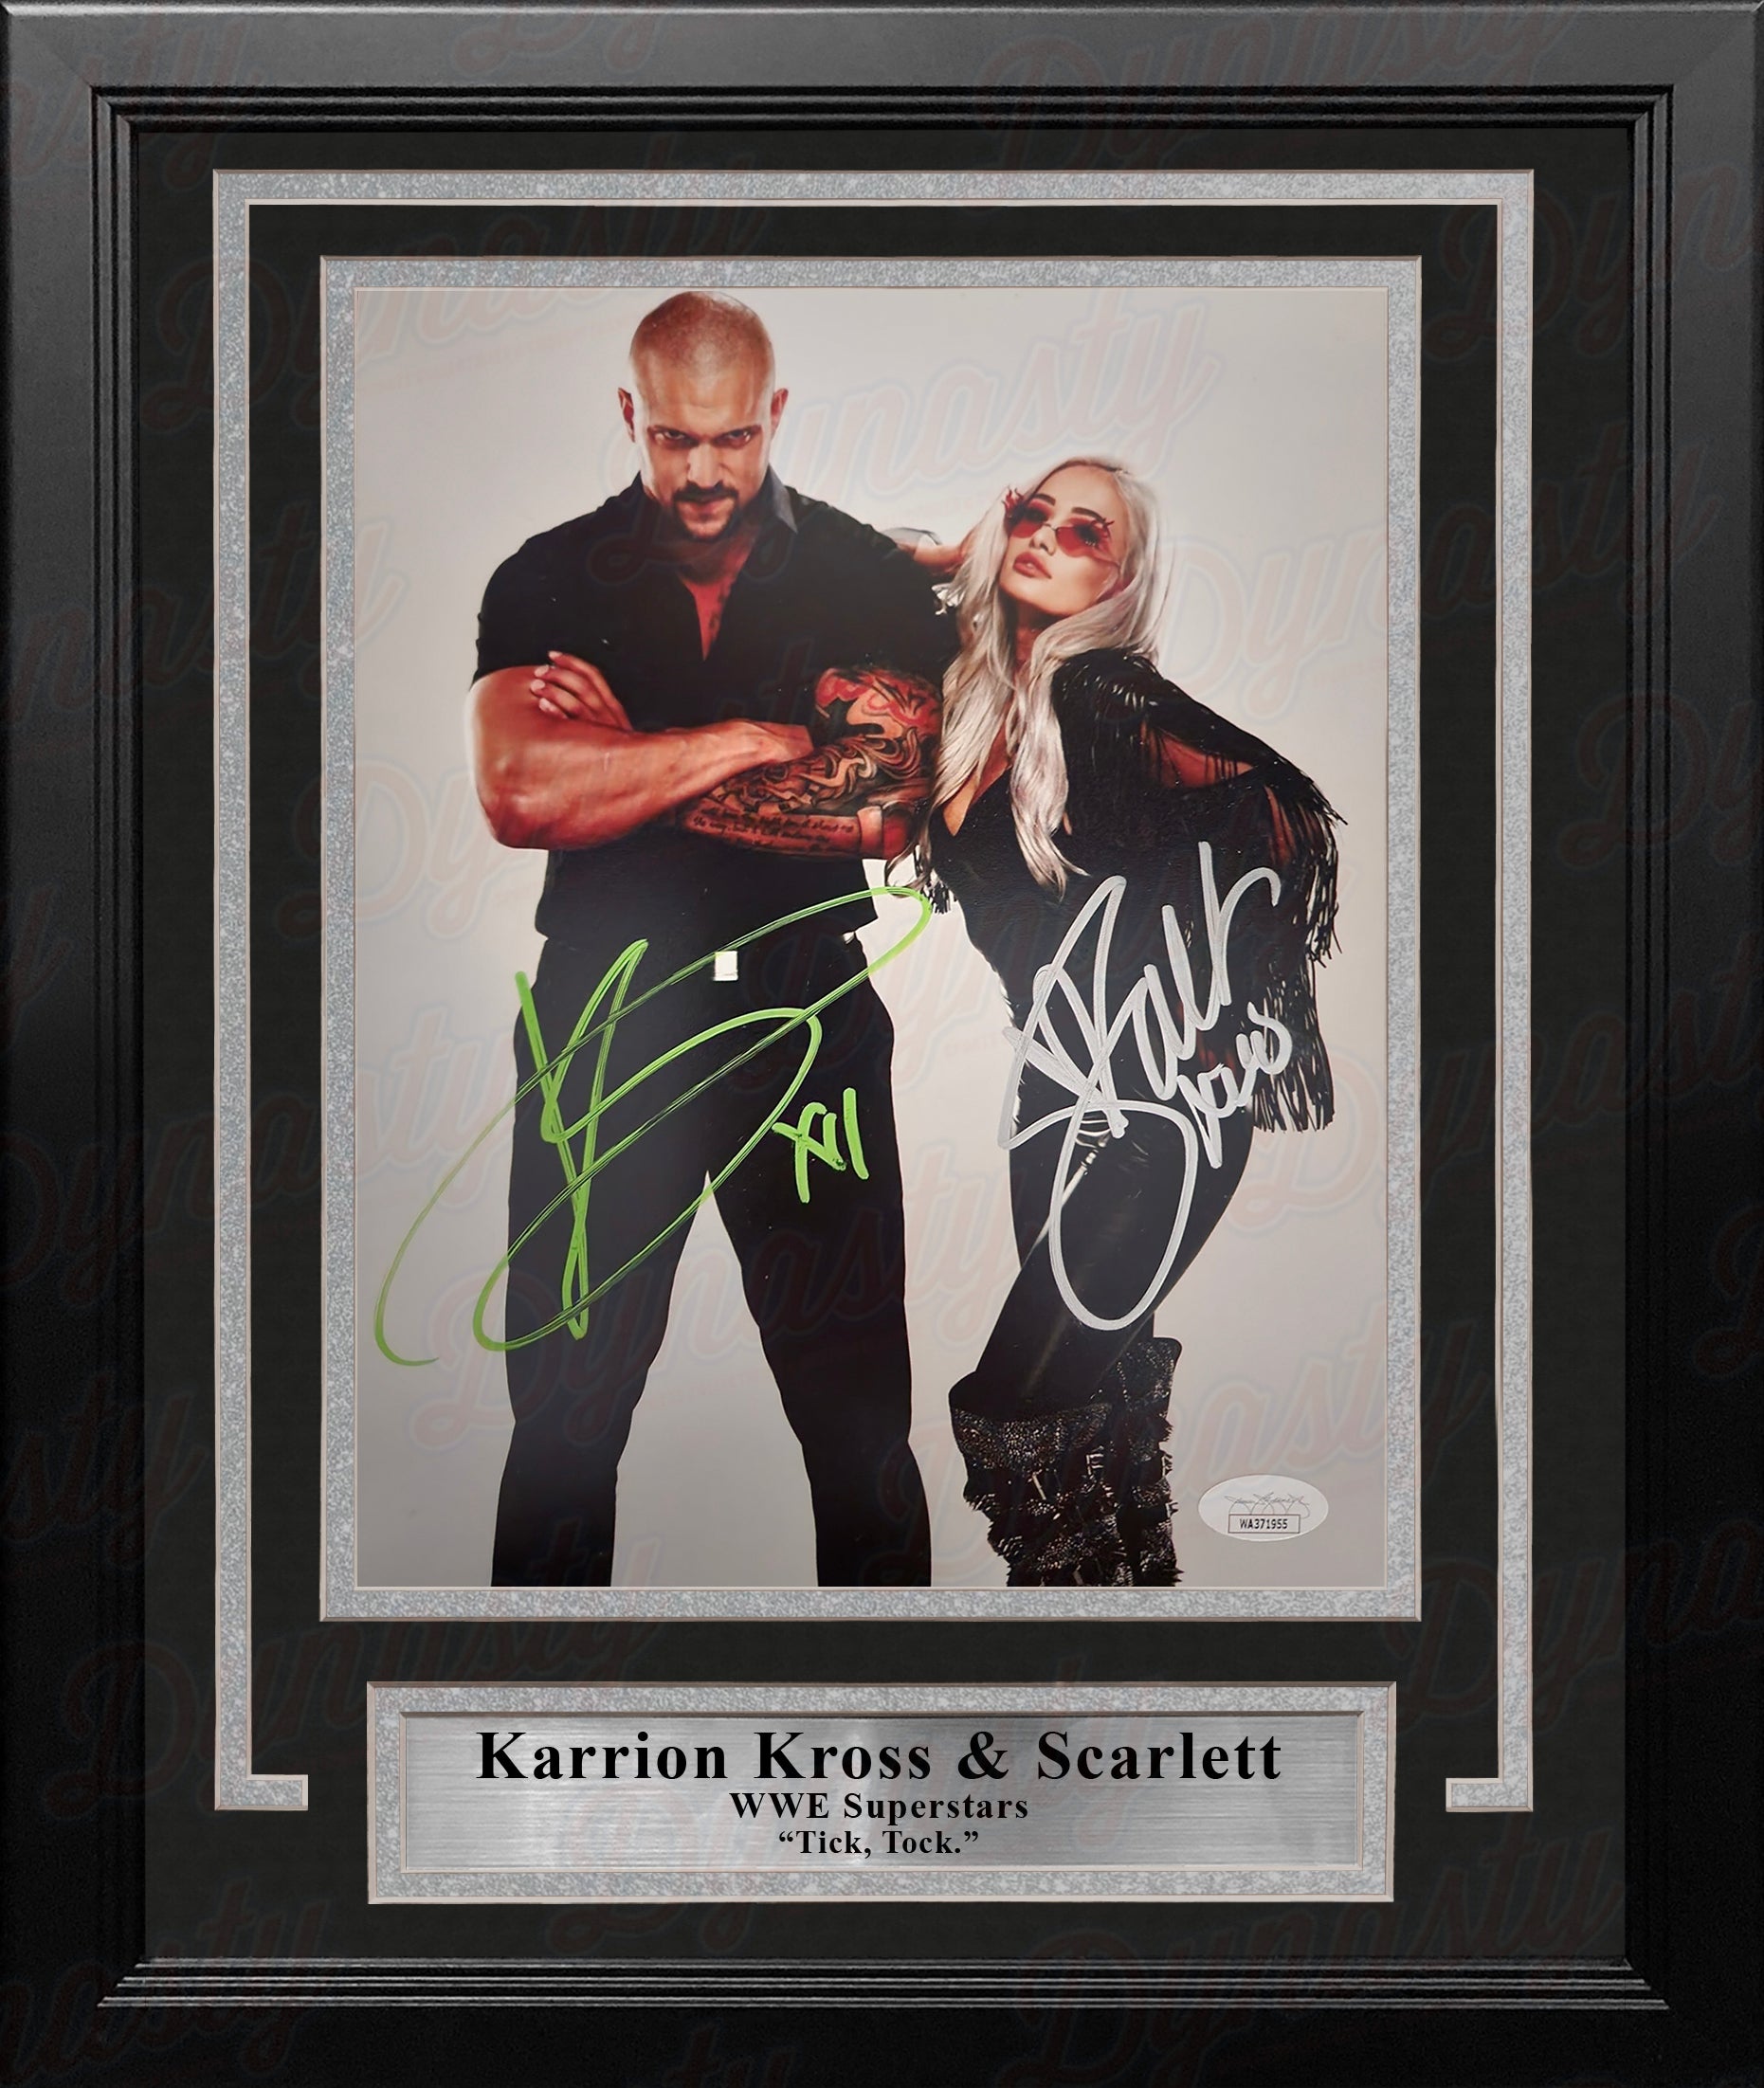 Karrion Kross & Scarlett Autographed 8" x 10" Framed WWE Wrestling Photo - Dynasty Sports & Framing 